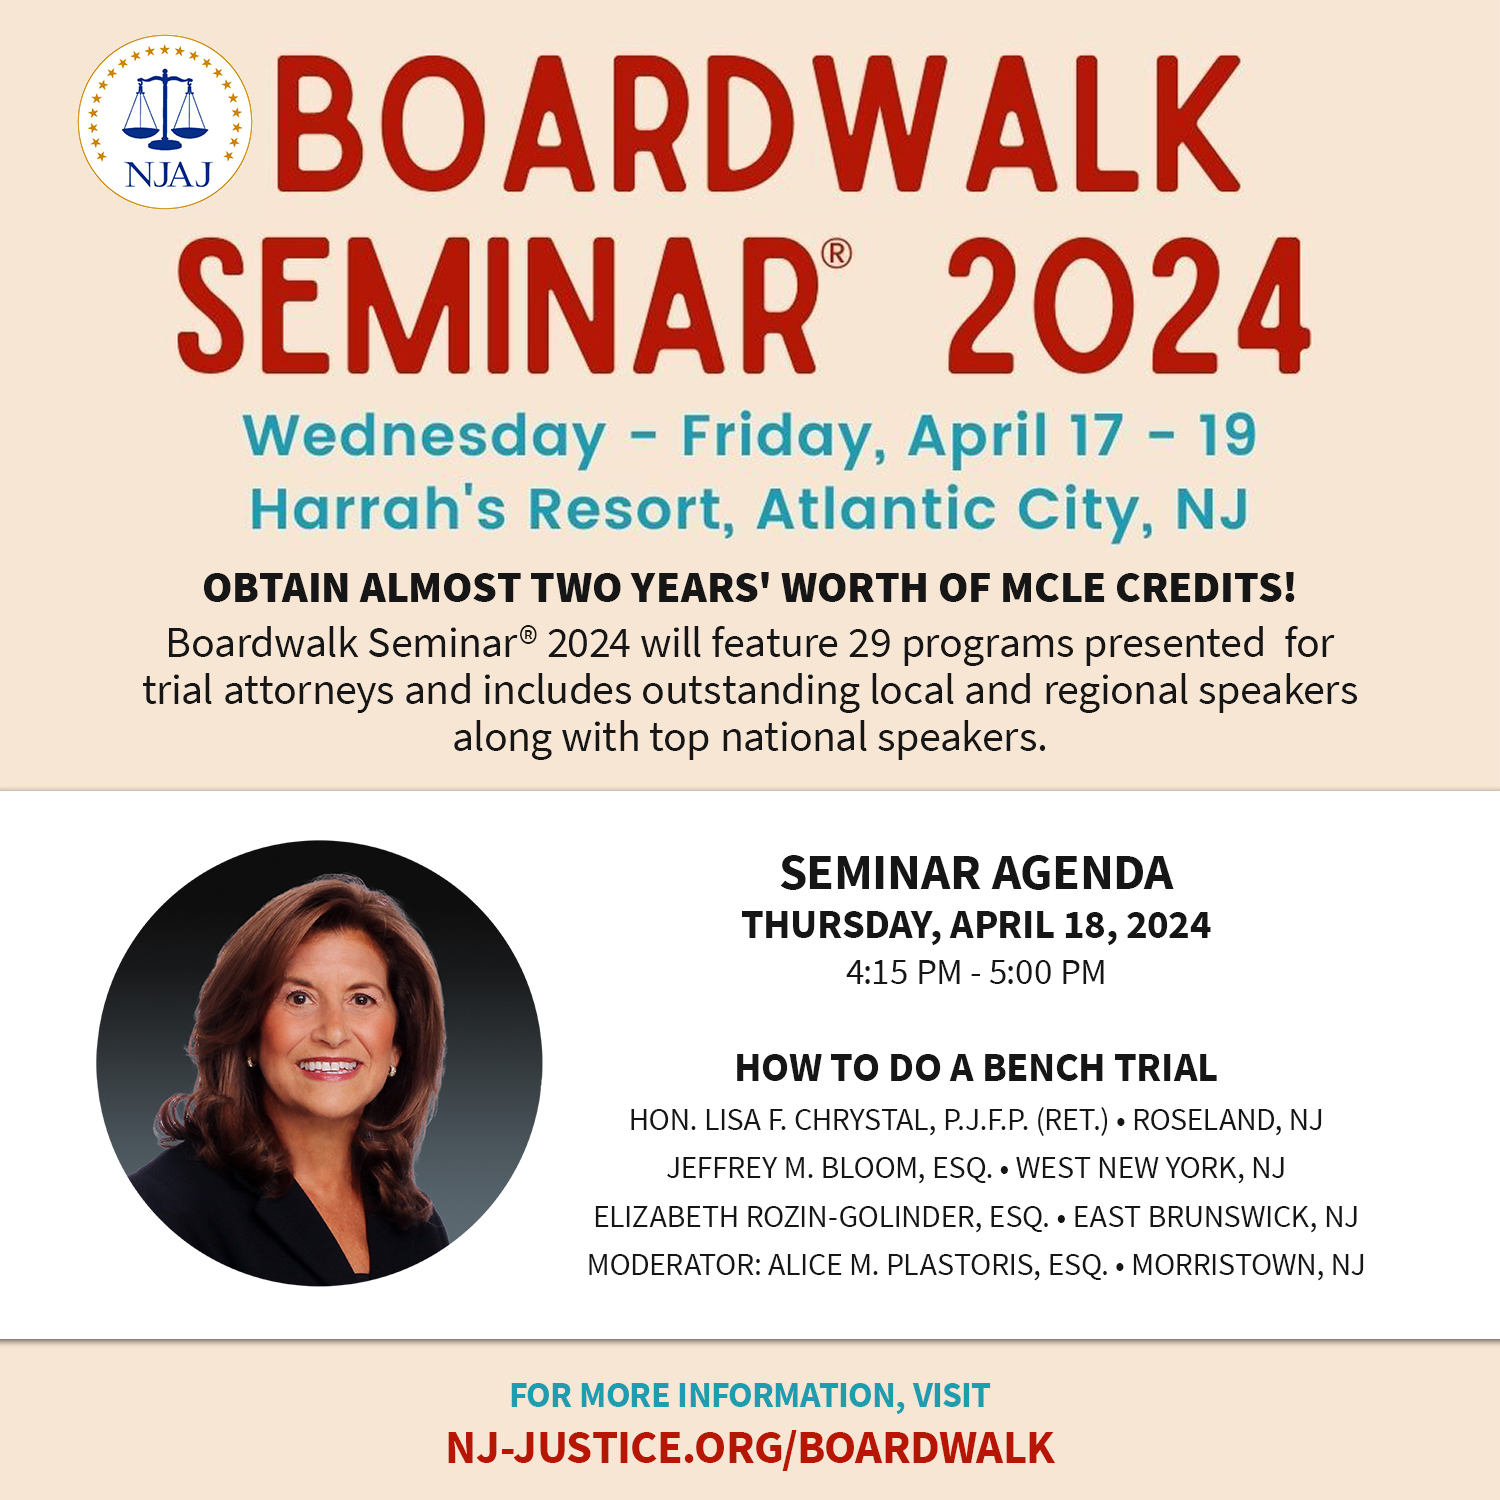 Boardwalk Seminar 2024 with Hon. Lisa F. Chrystal, P.J.F.P. (Ret.)